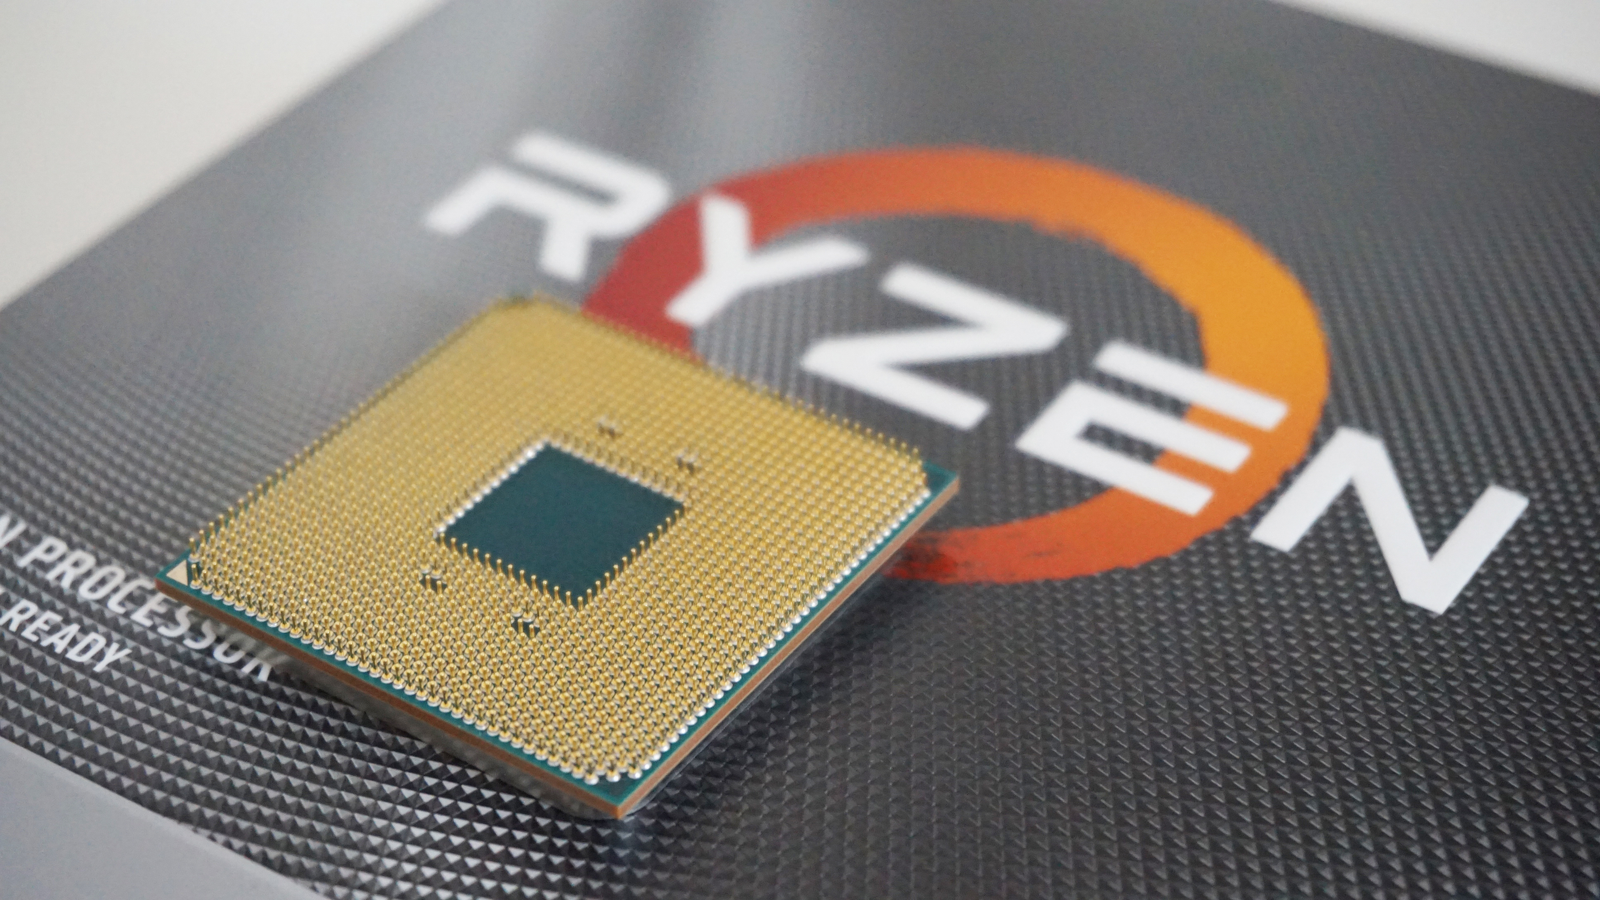 AMD Ryzen 5 3600: Older bestseller head-to-head with new CPUs